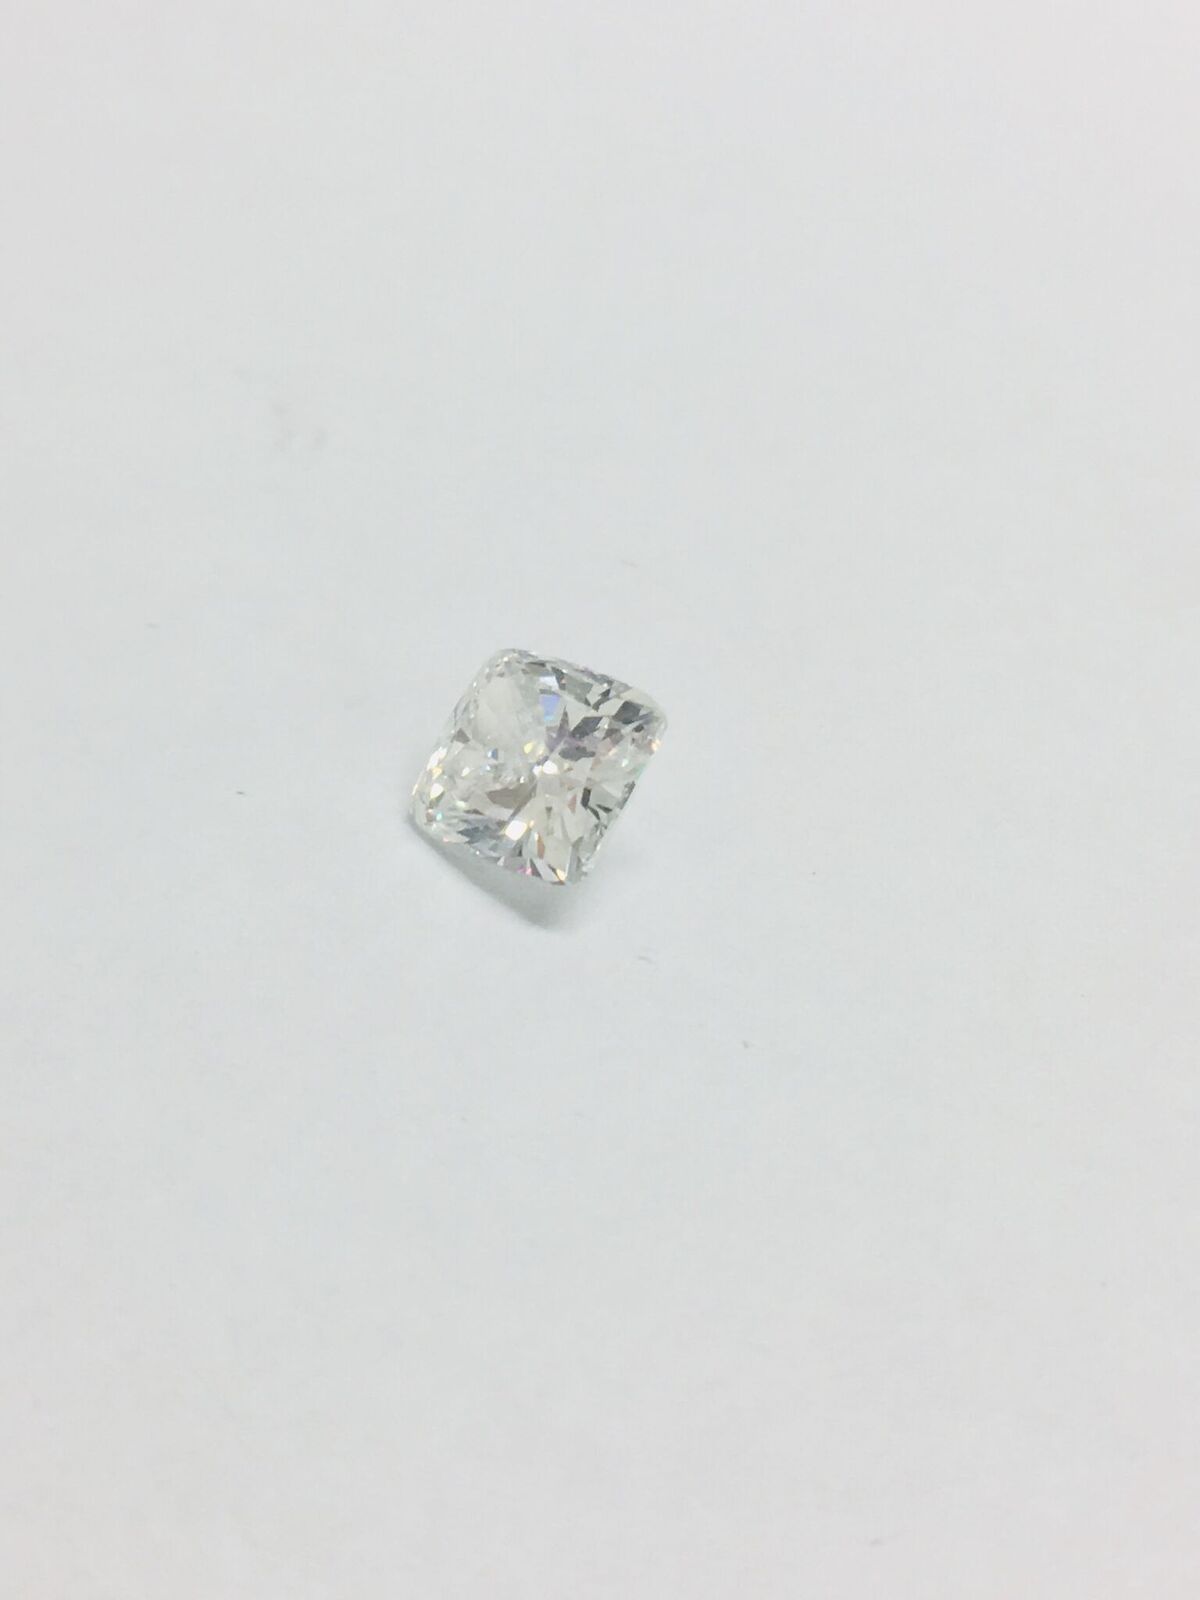 1.10ct Radiant cut natural Diamond - Image 12 of 21